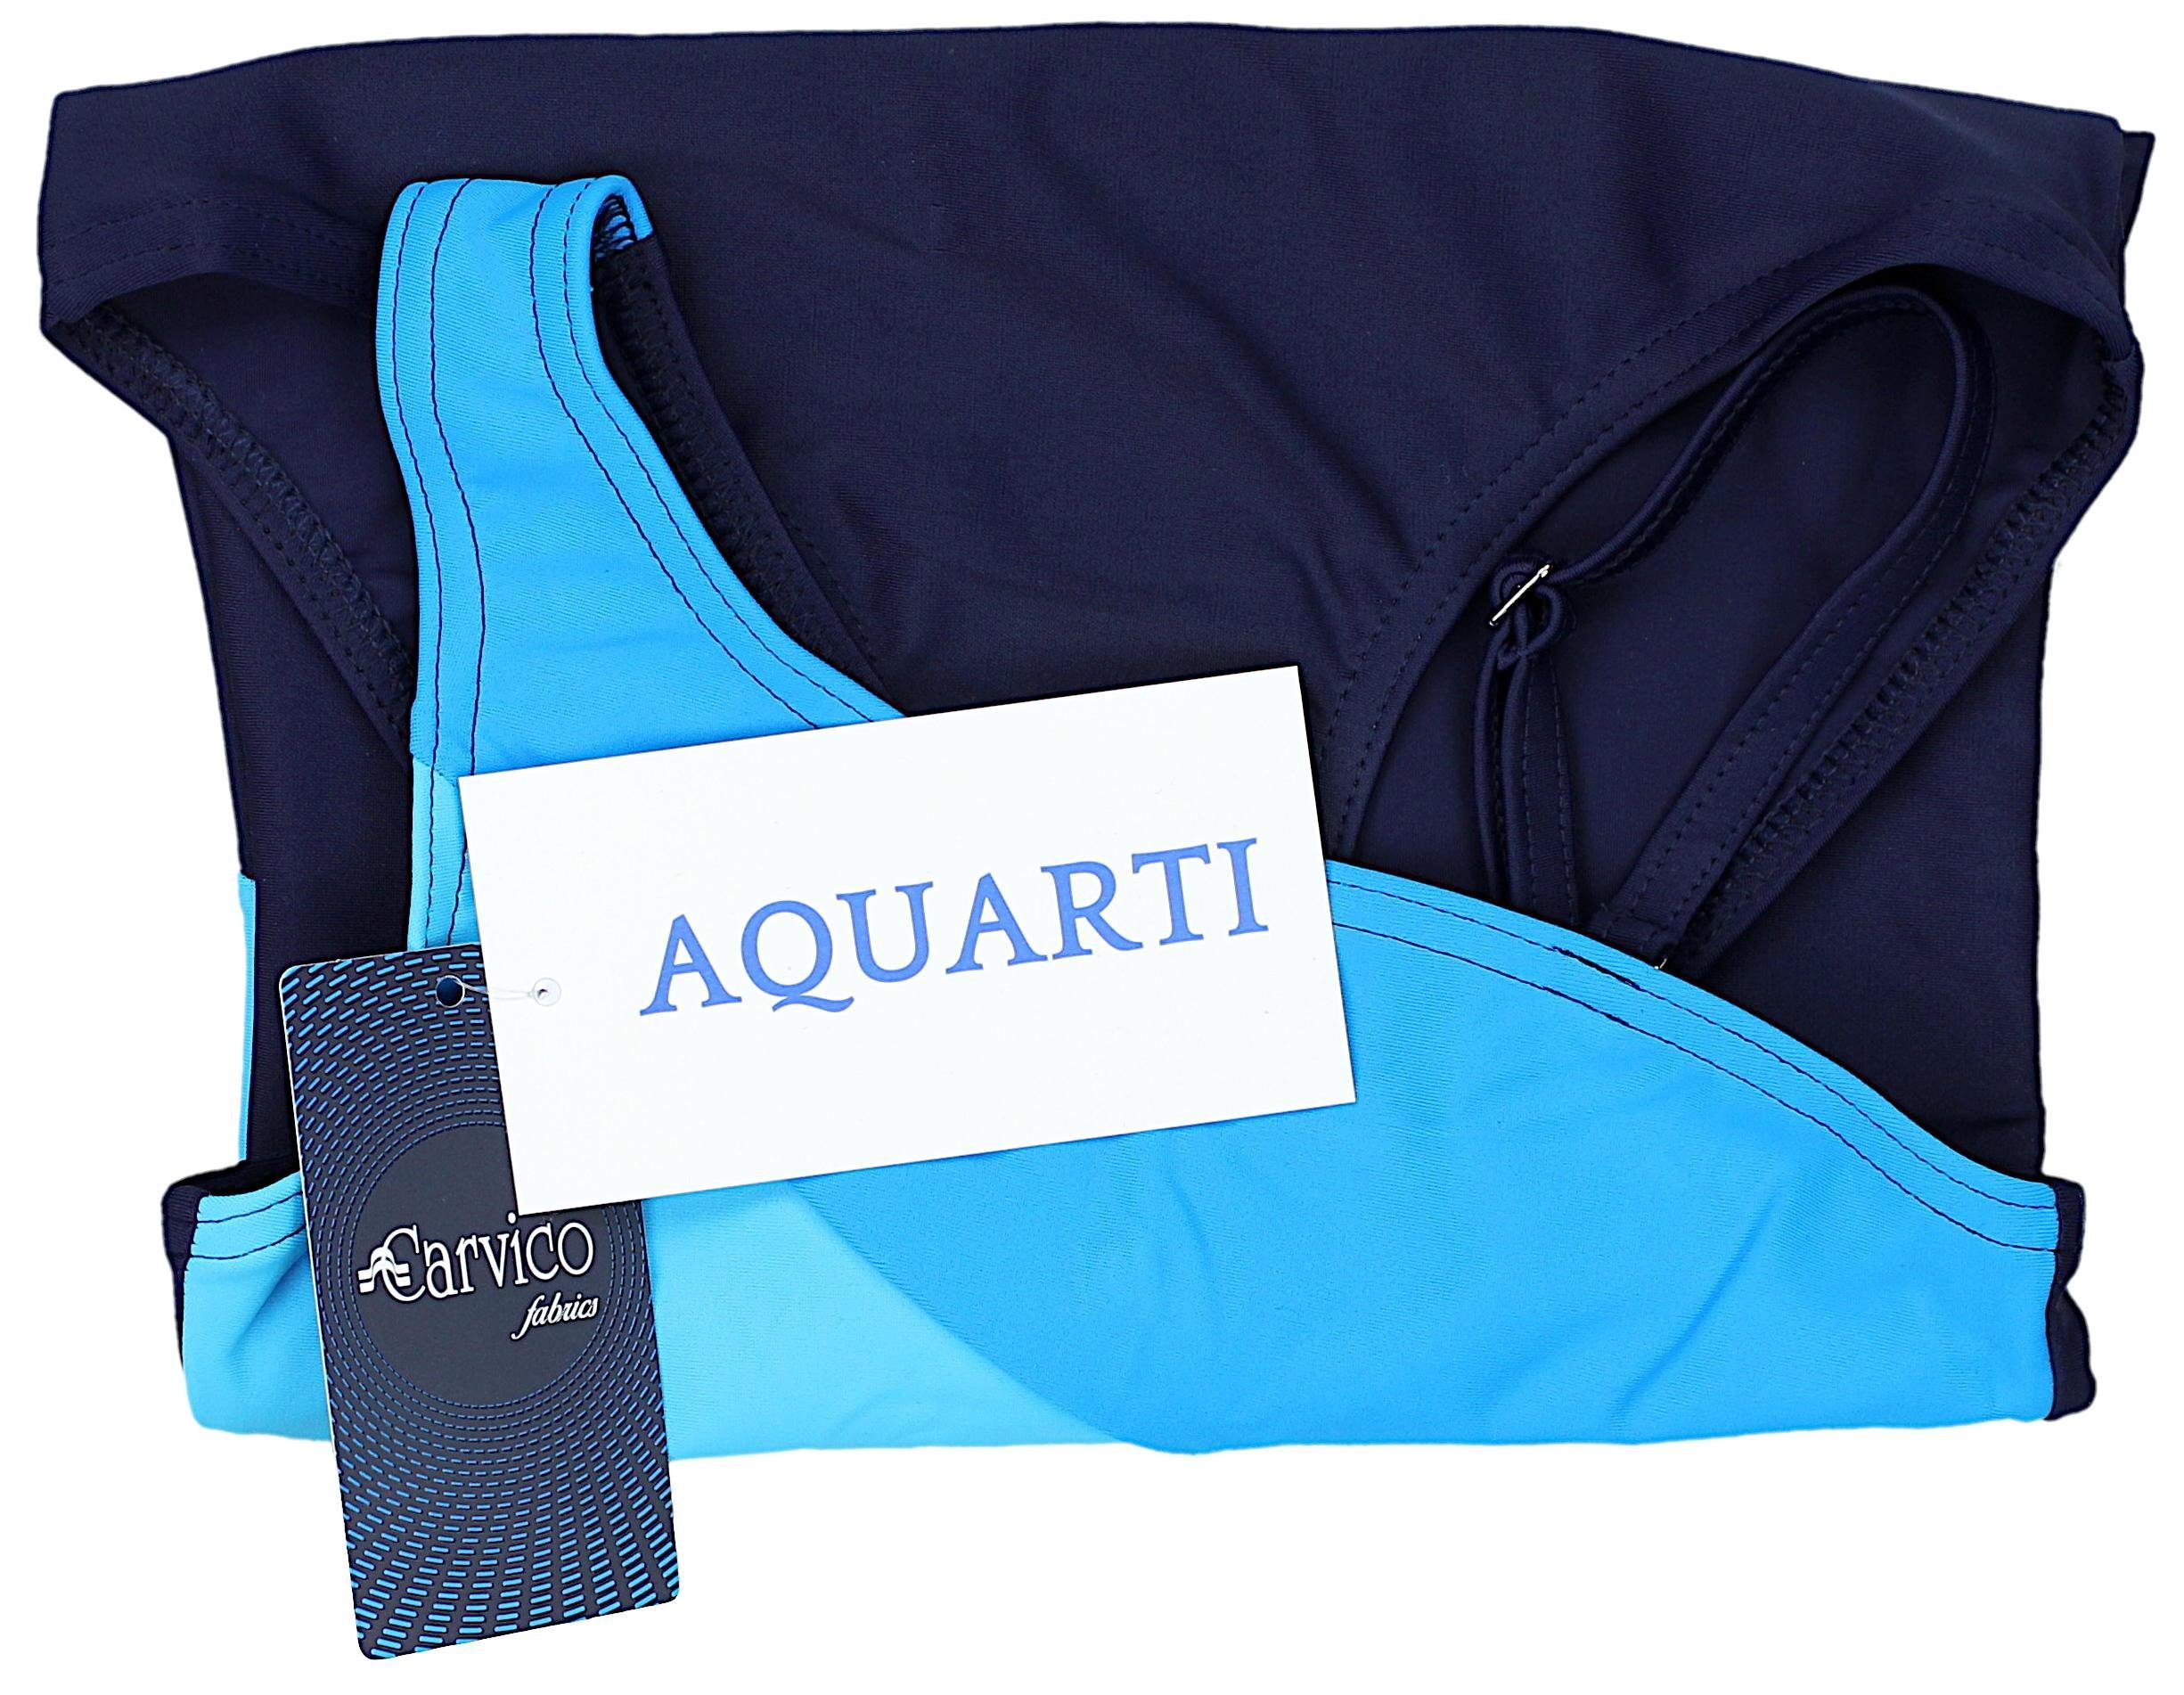 Badeanzug / Aquarti Türkis / Badeanzug mit Aquarti Blau Spaghettiträgern 032C Dunkelblau Streifen Mädchen